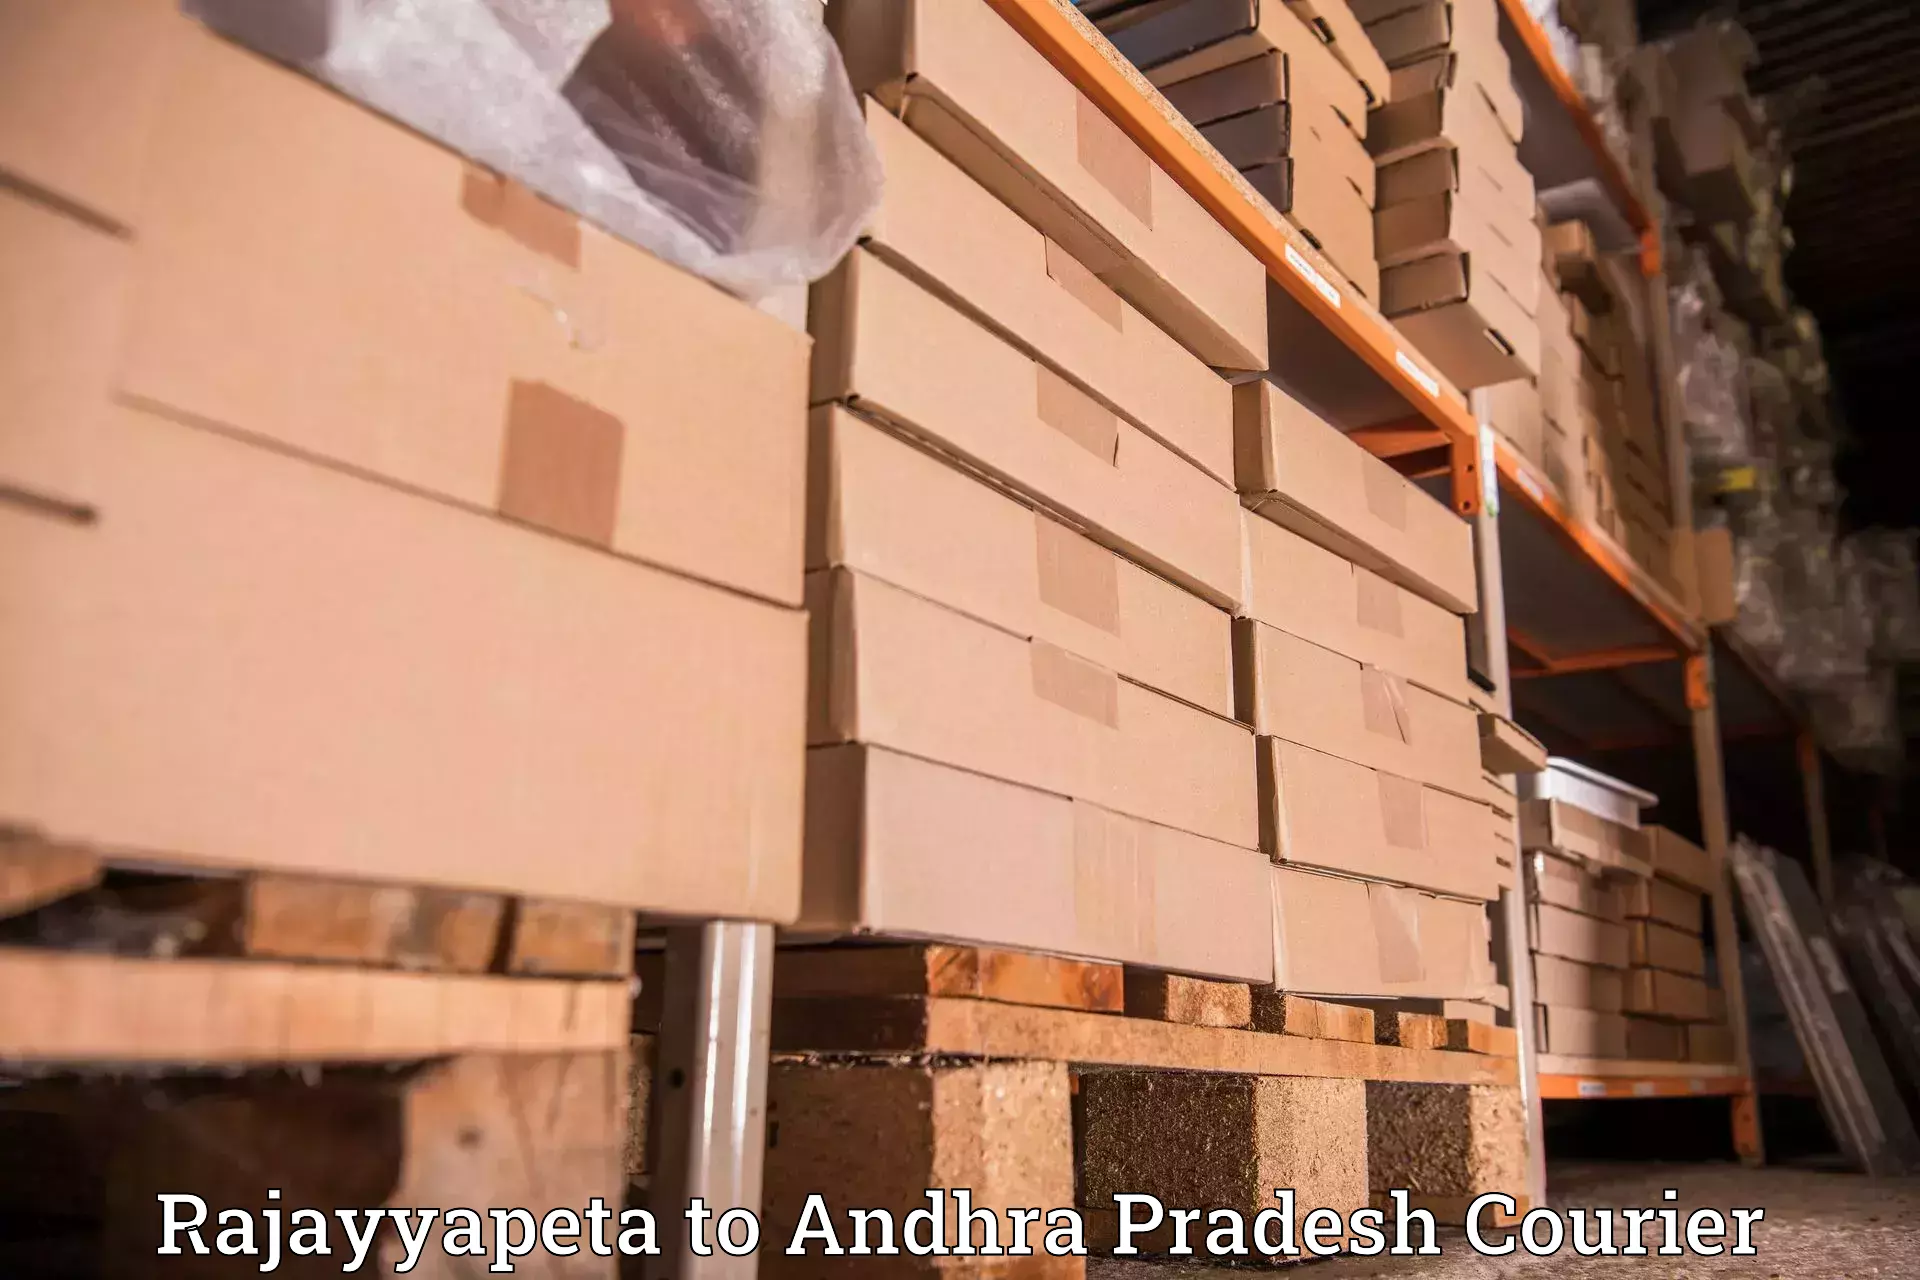 Nationwide delivery network Rajayyapeta to Kalyandurg